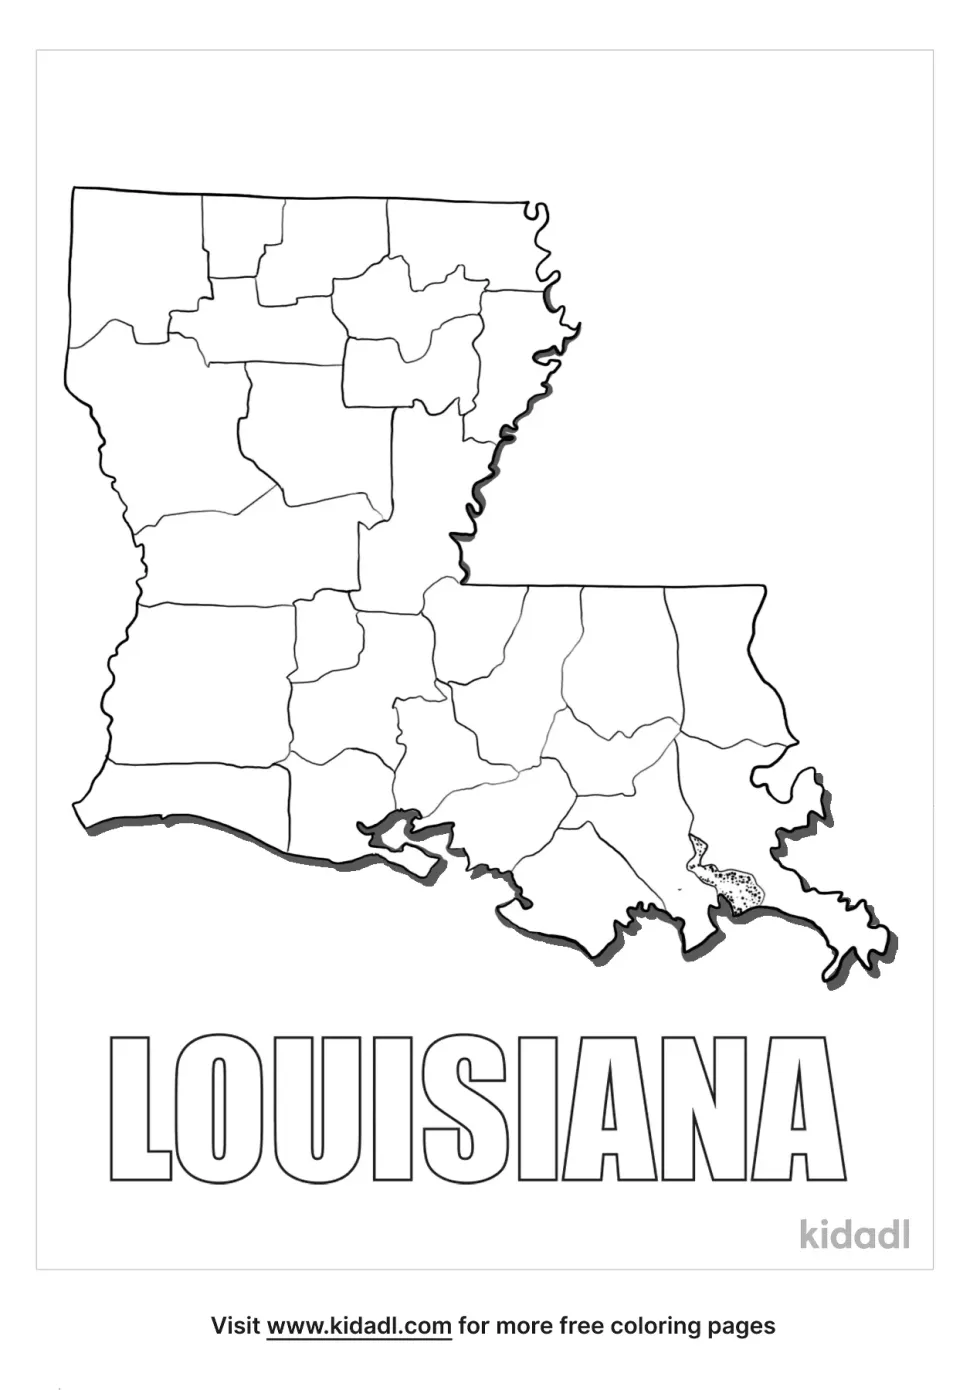 Louisiana Coloring Page